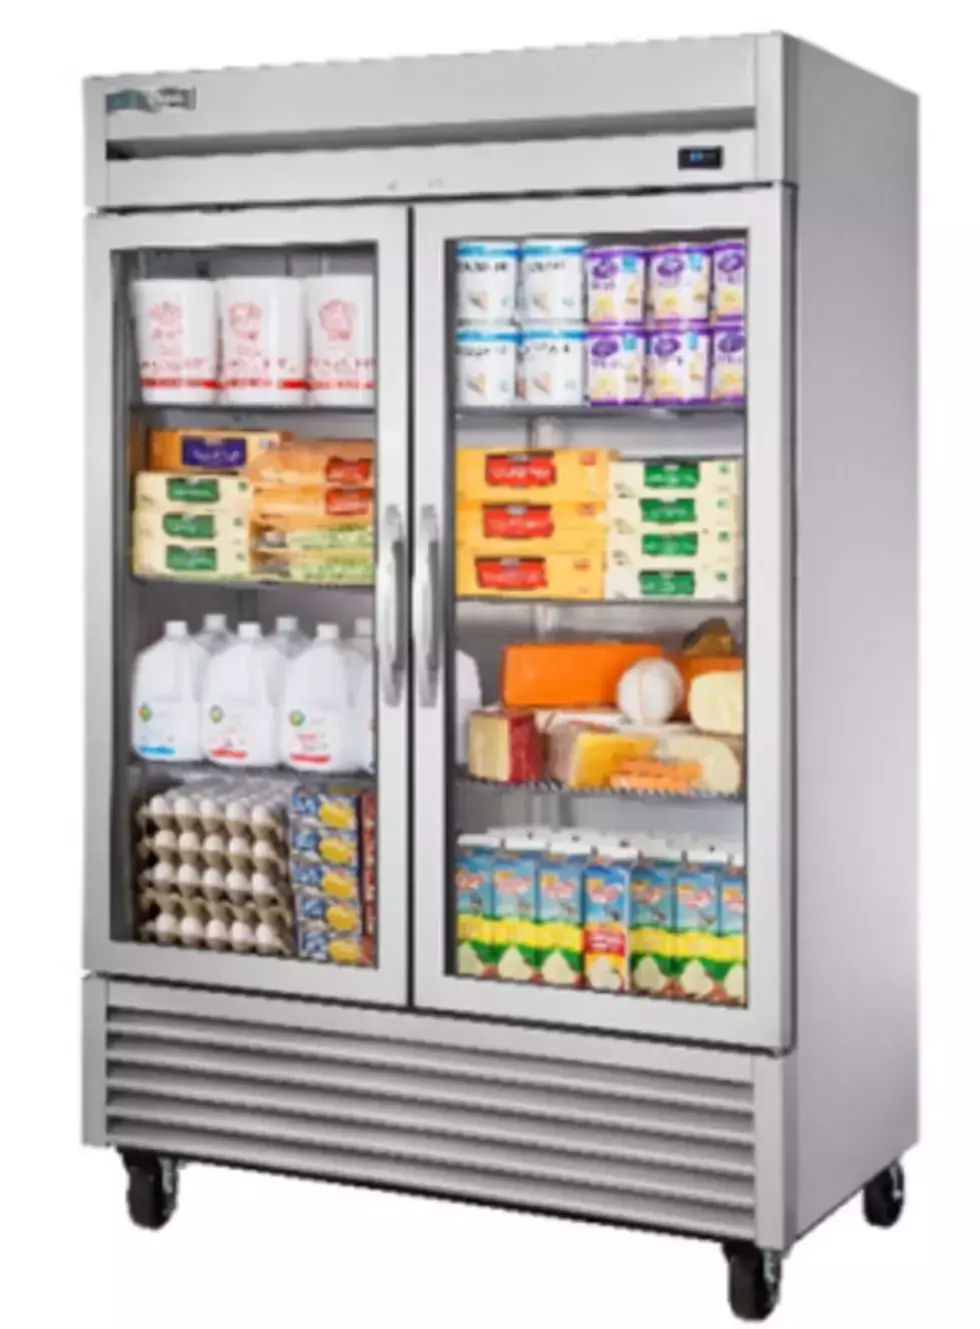 Commercial Refrigerators with Secop Compressors